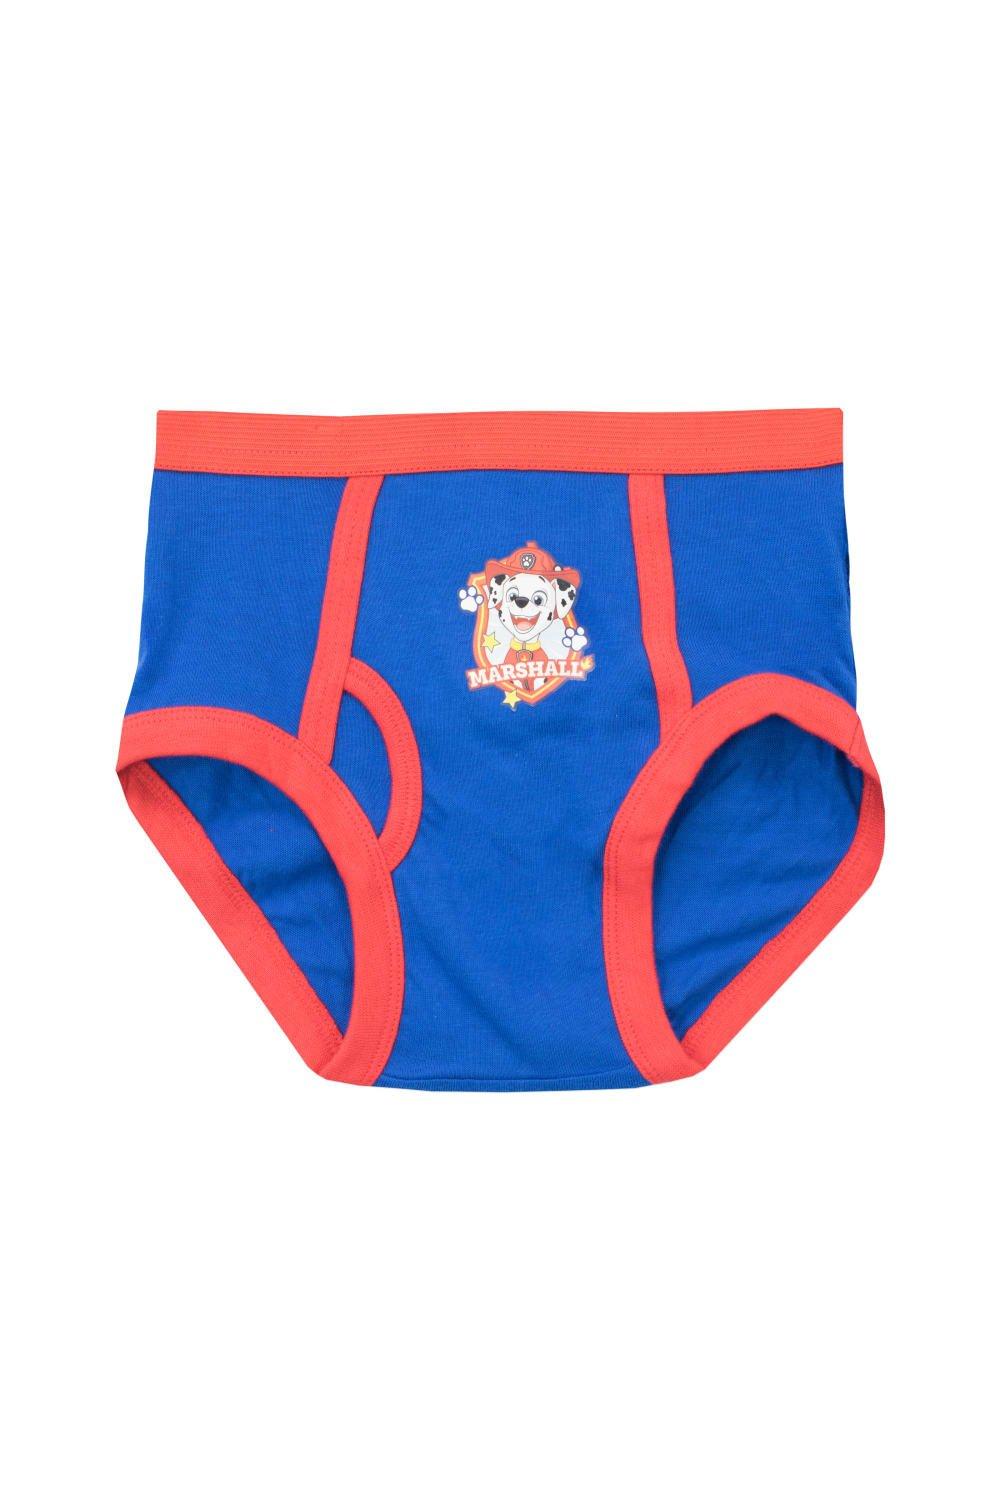 Underwear & Socks, Paw Patrol Skye Underwear 5 Pack